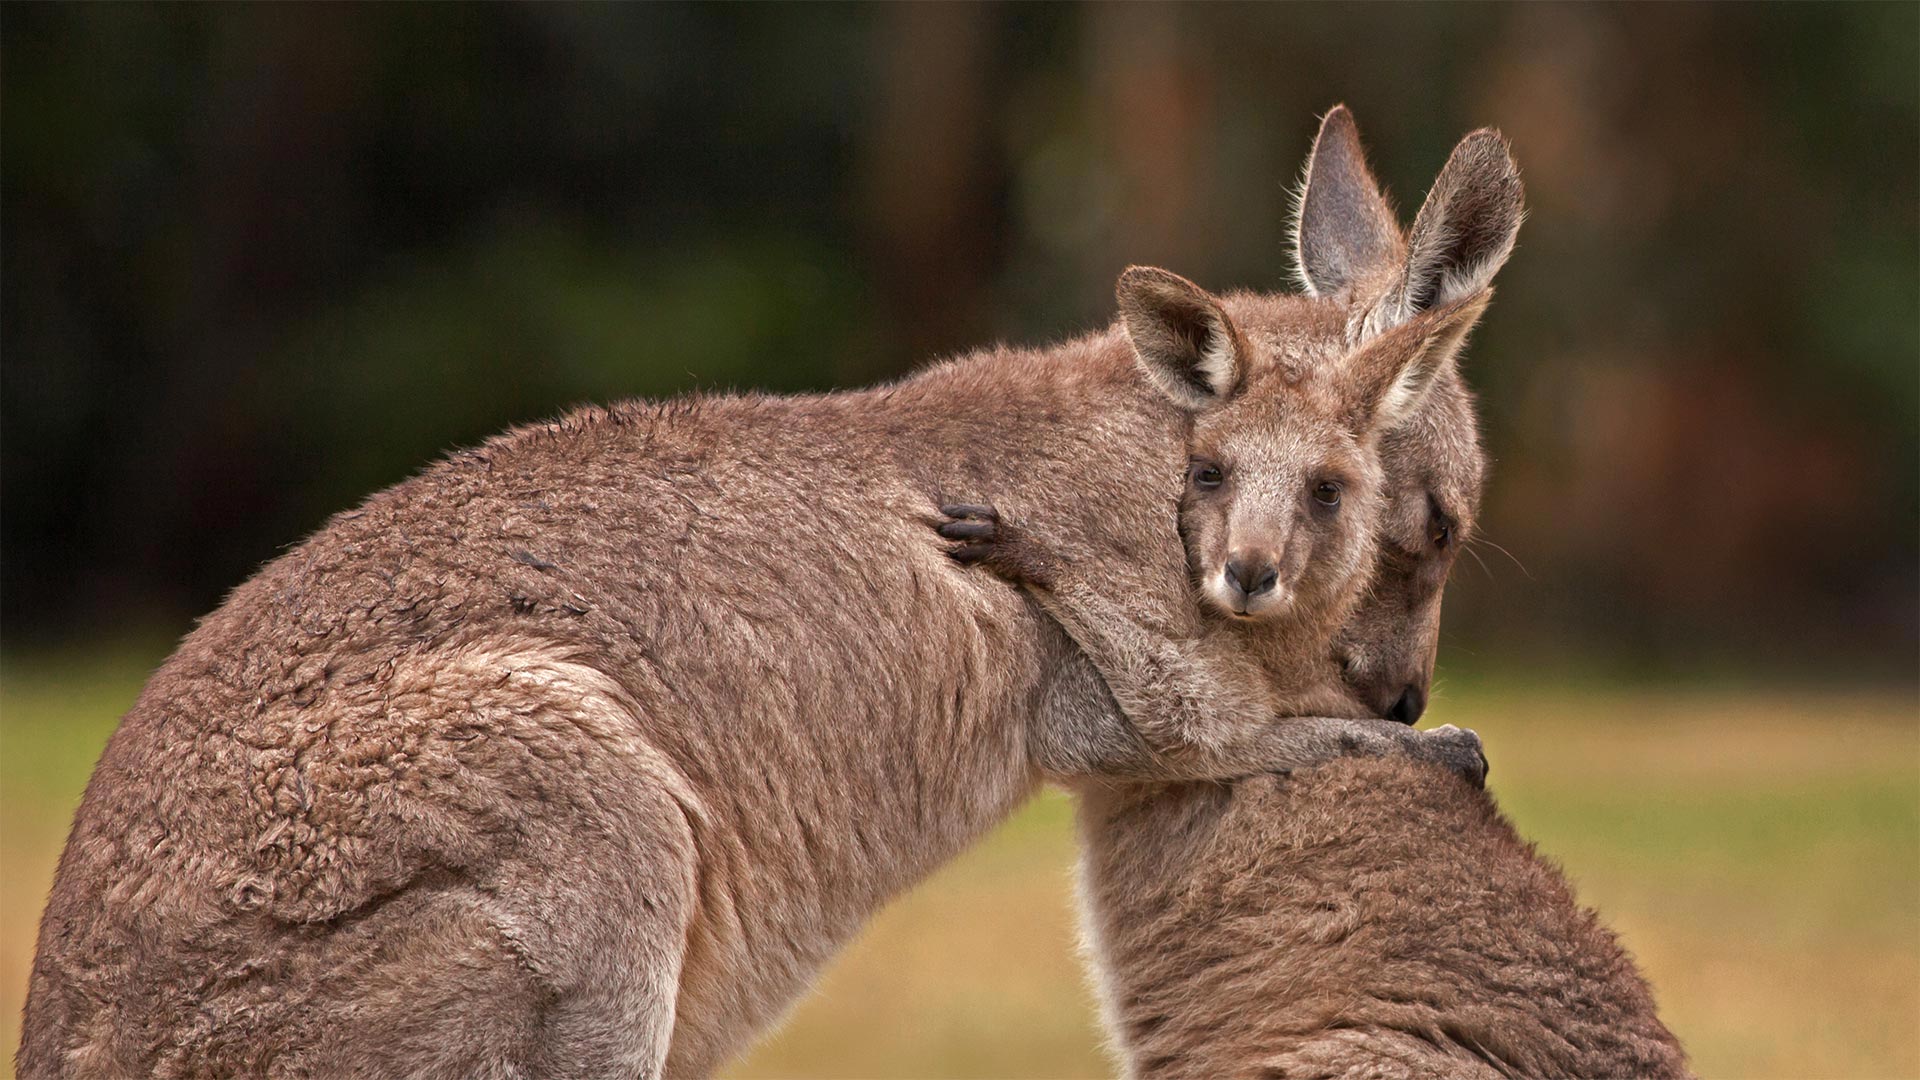 Kangaroo mother and baby - Belle Ciezak/Shutterstock)